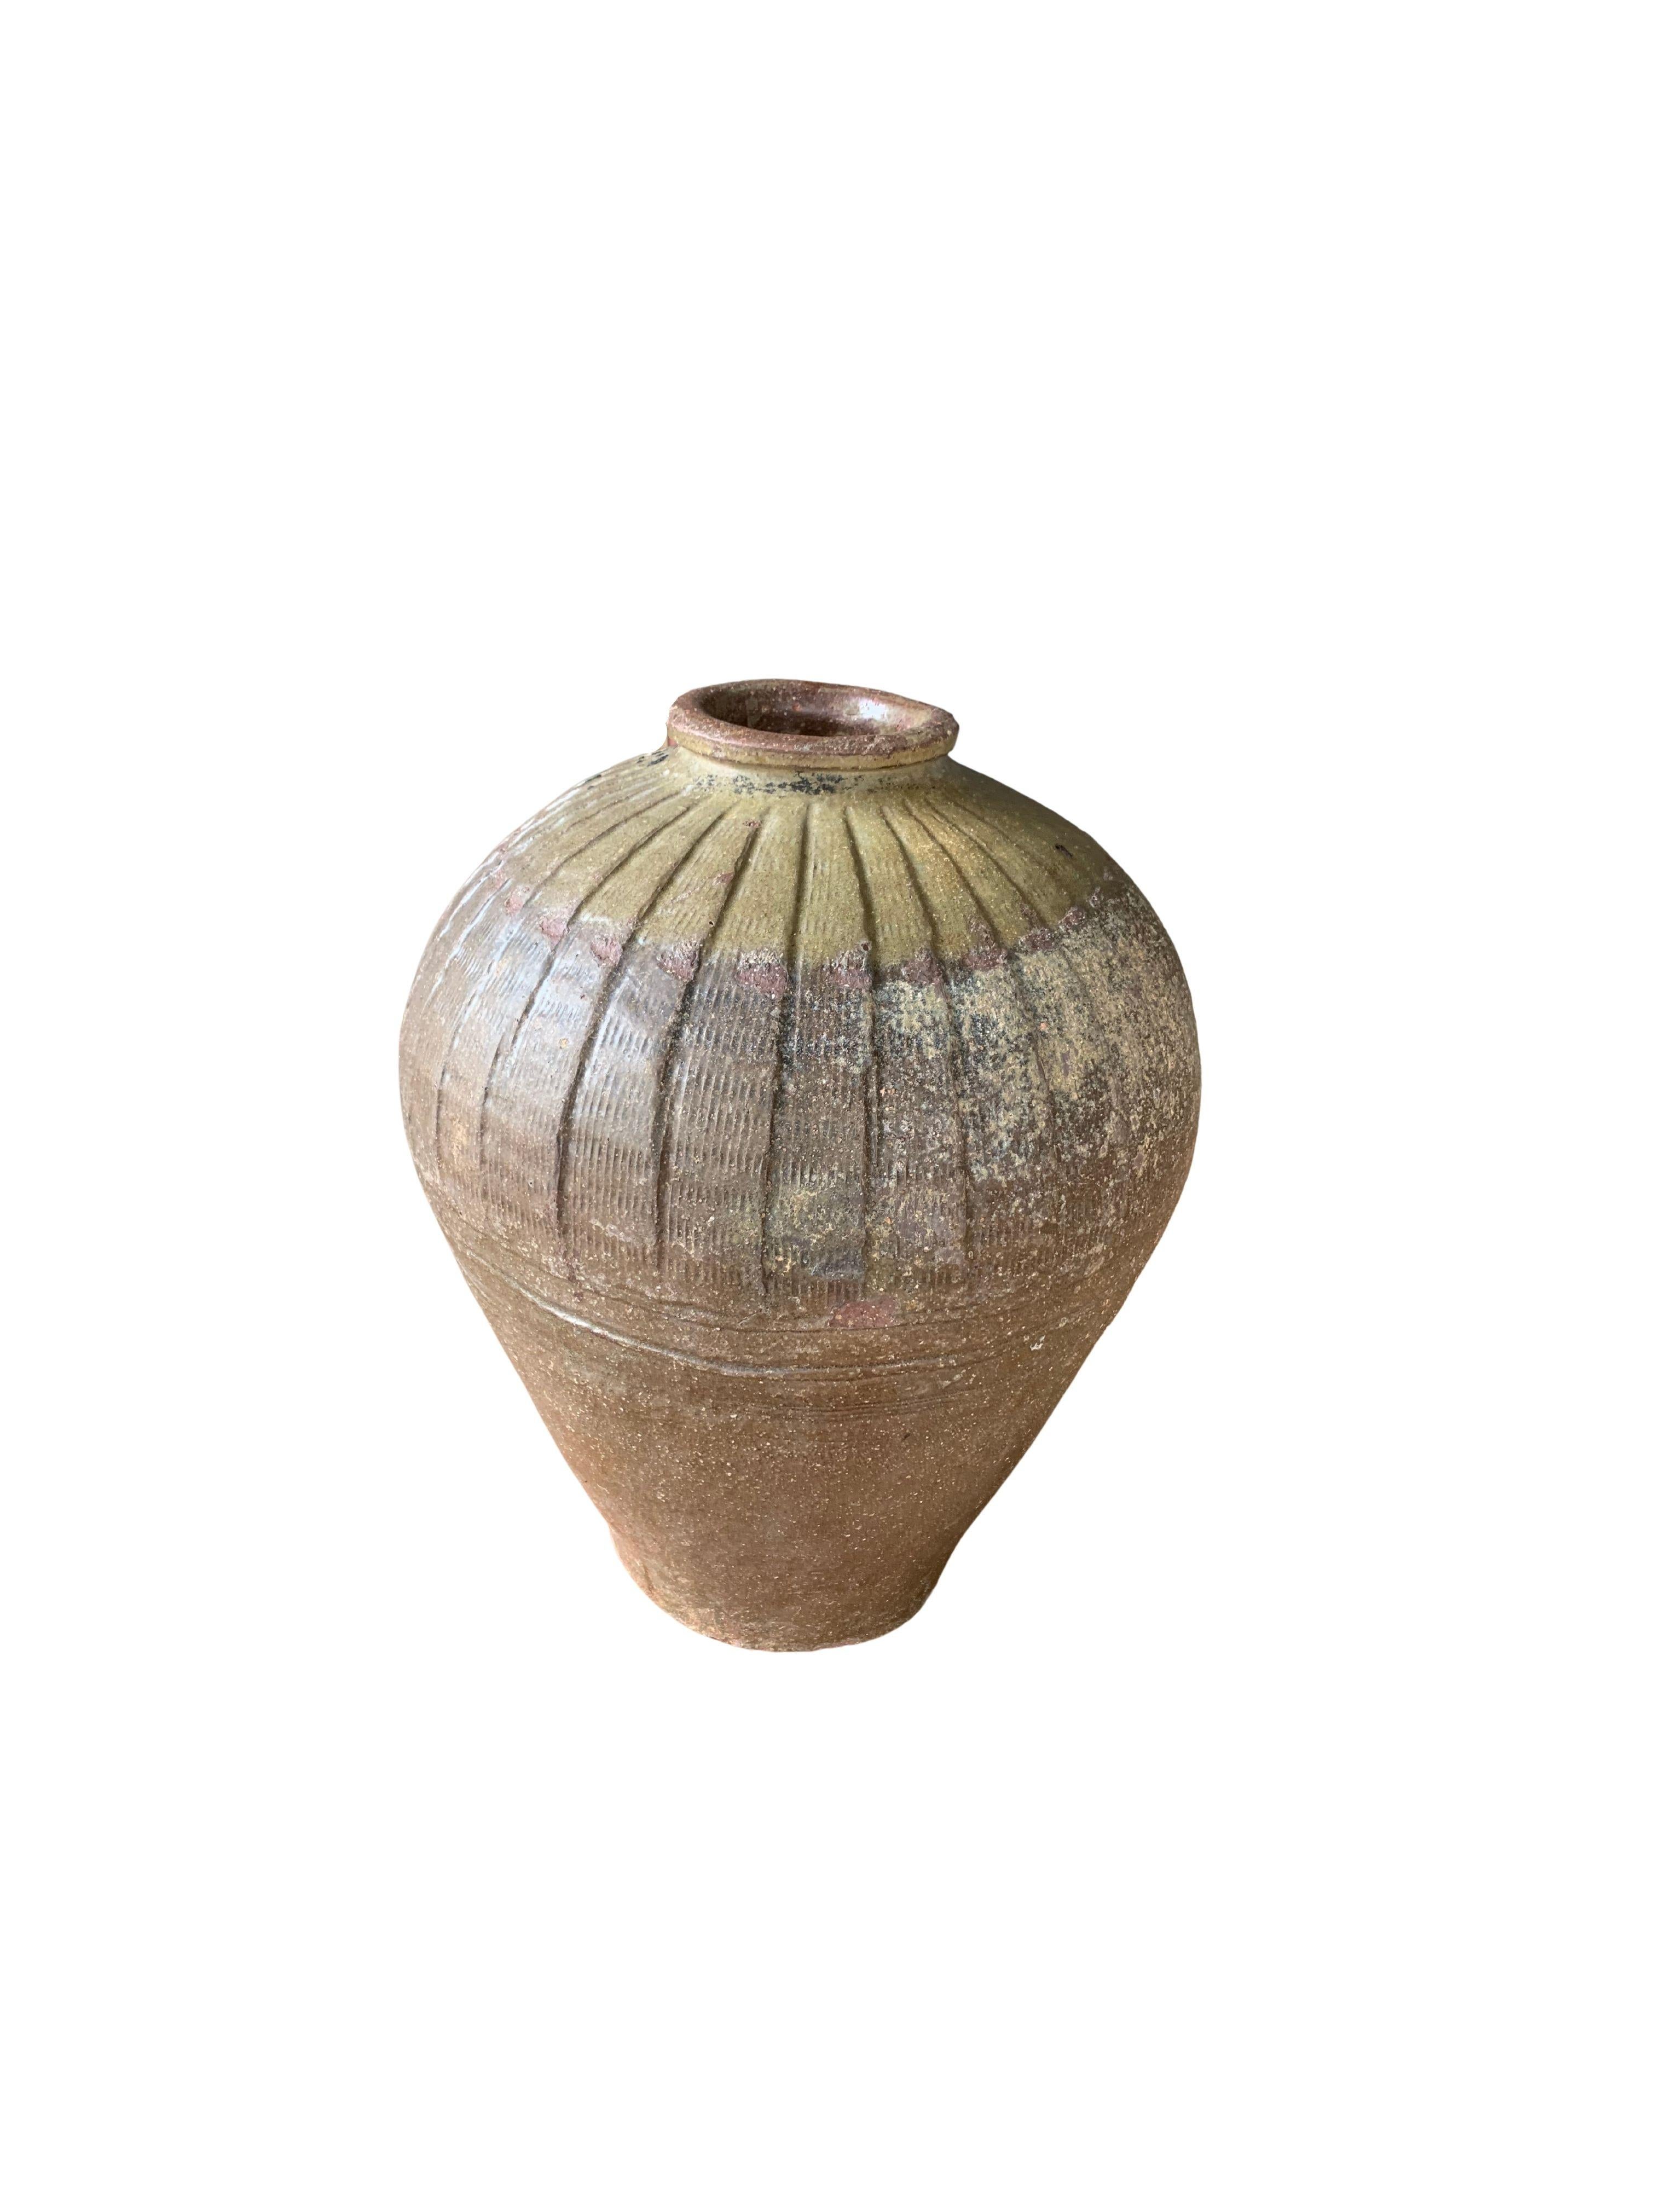 Qing Antique Chinese Ceramic Pickling Jar Jade Green, c. 1900 For Sale